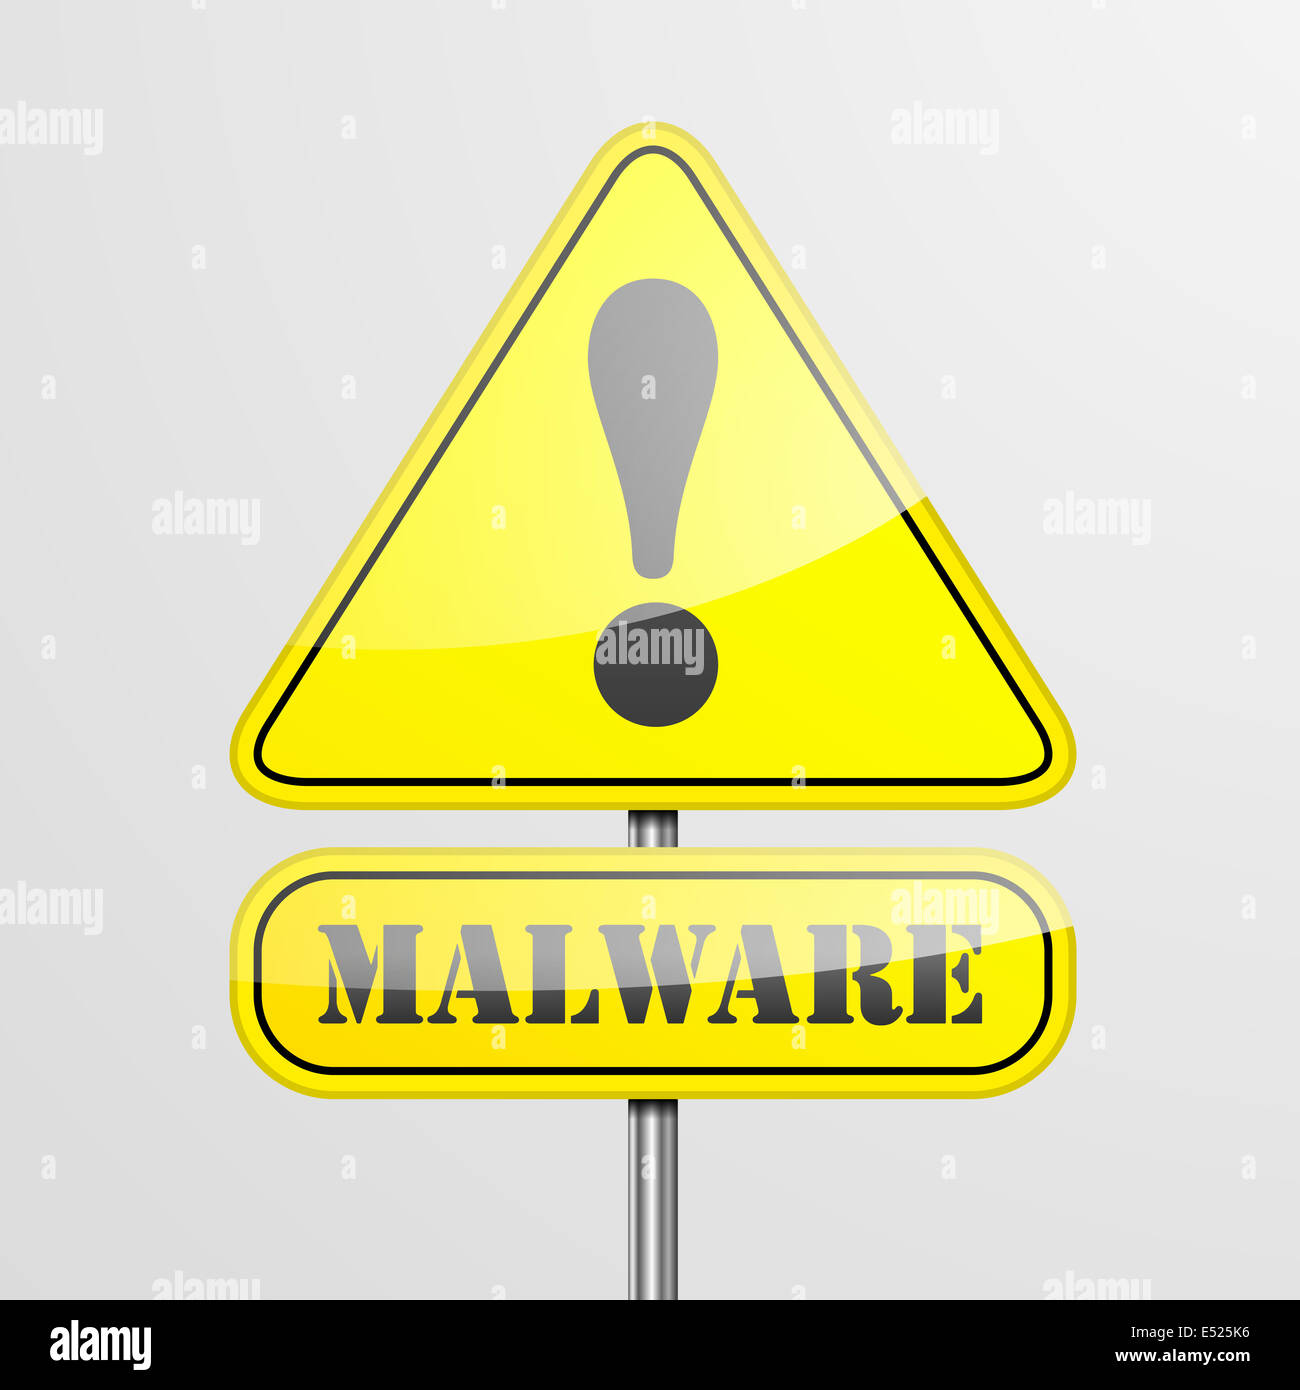 RoadSign Malware Stock Photo